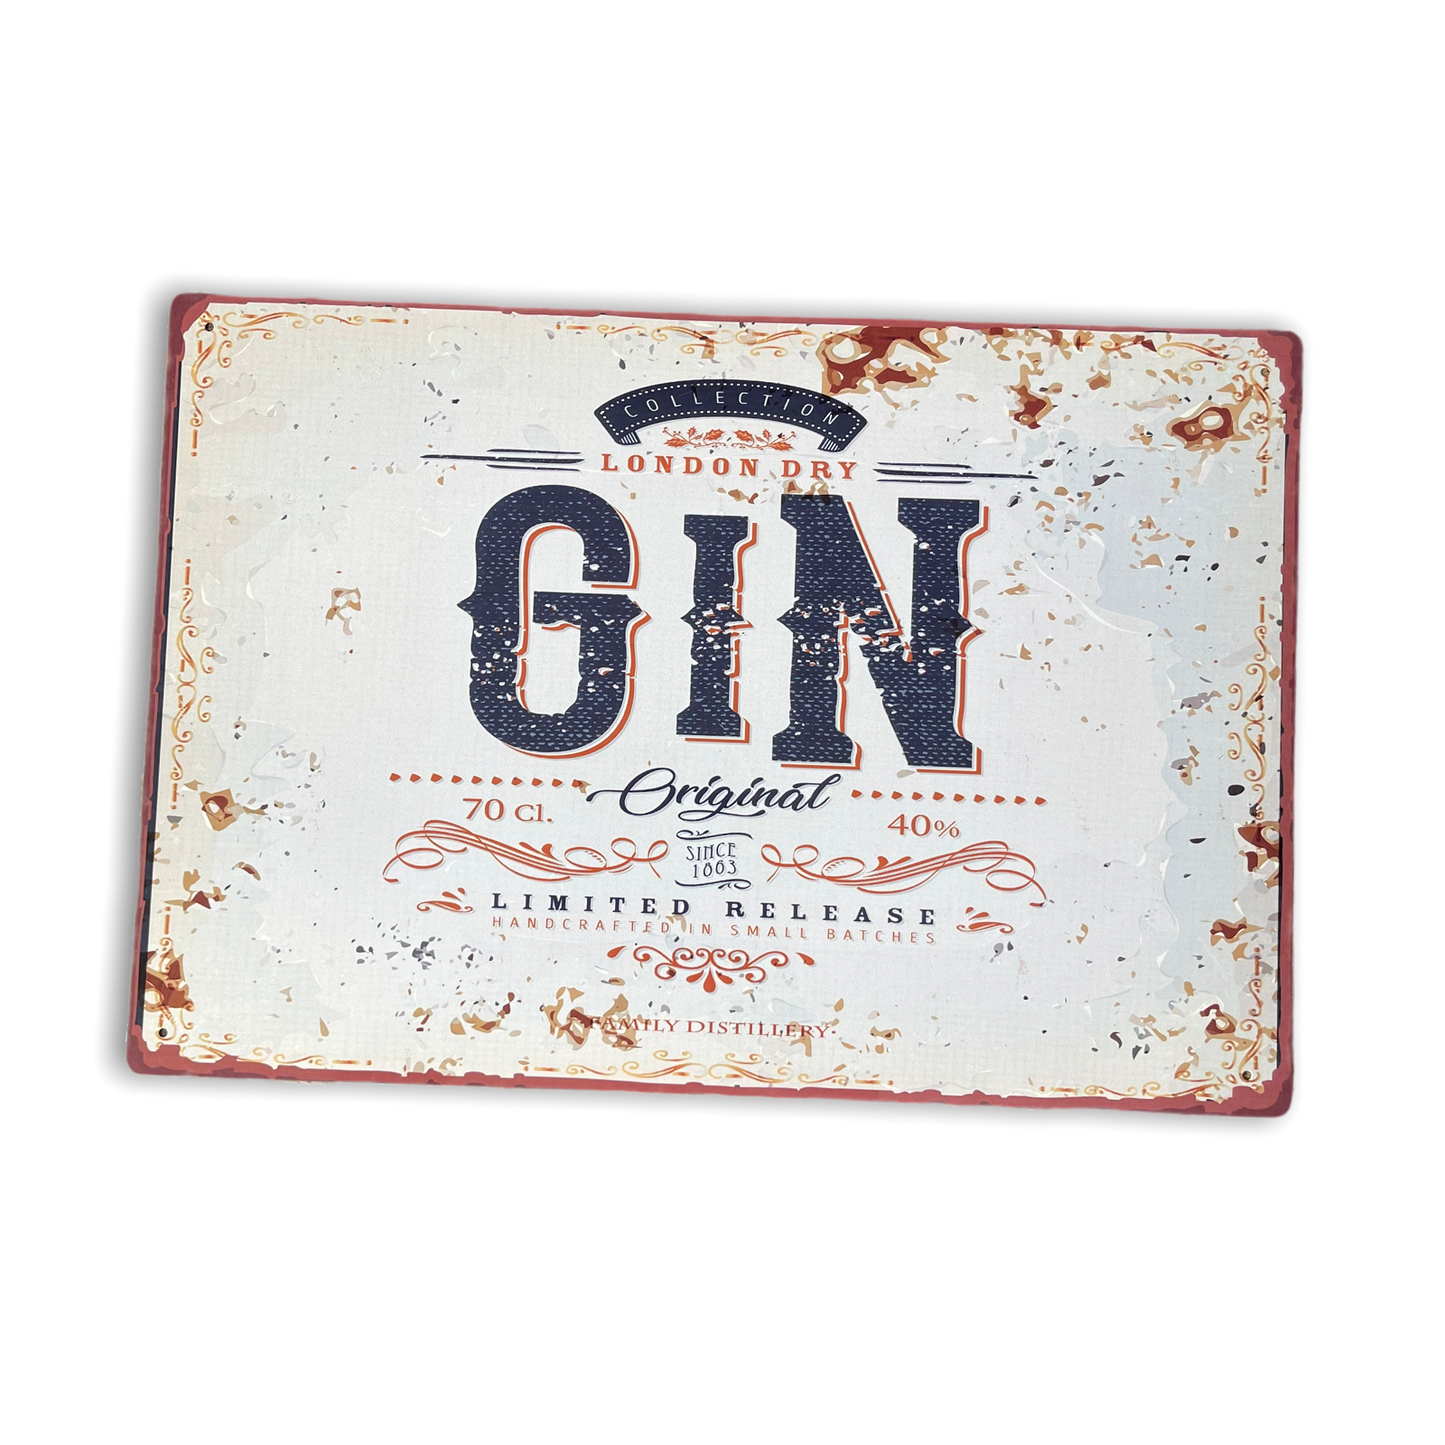 Vintage Metal Sign - Retro Advertising London Dry Gin